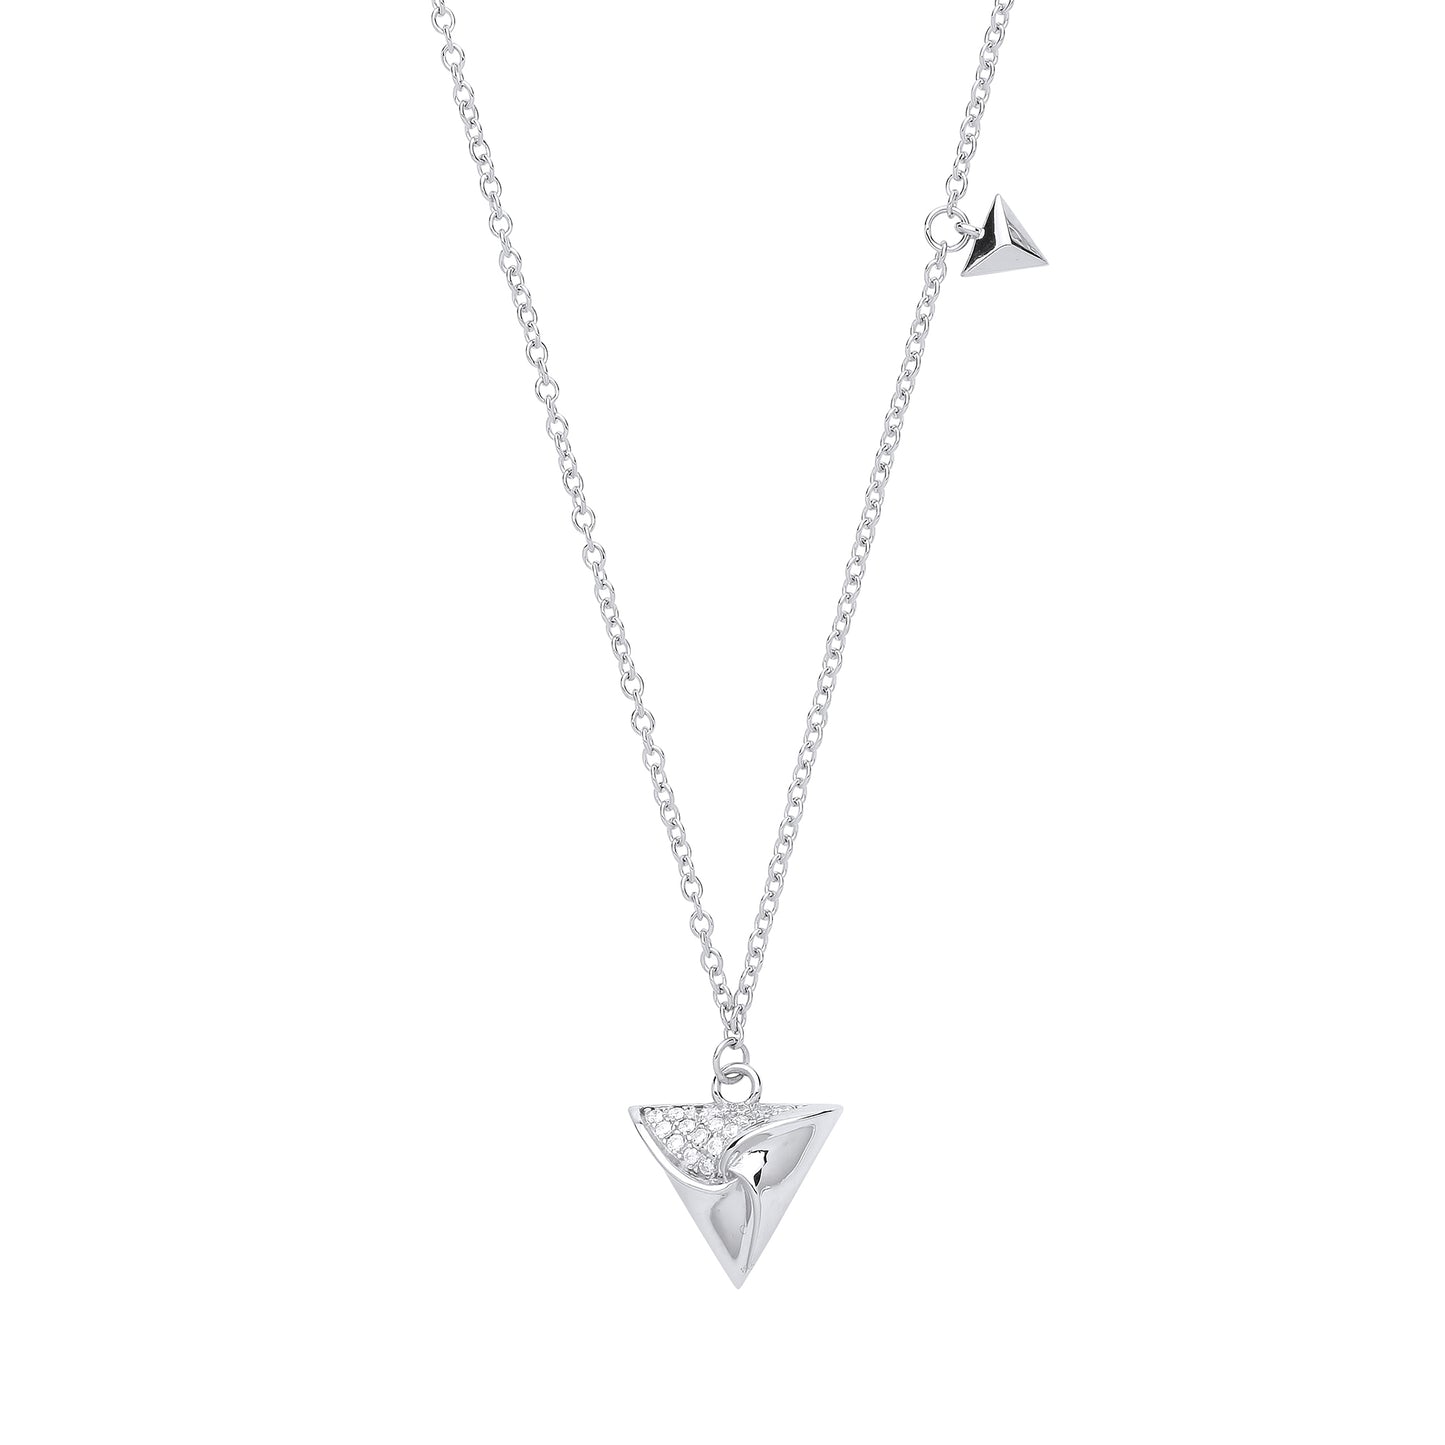 Silver  CZ Triangle Hamantaschen Charm Necklace 18 inch - GVK257